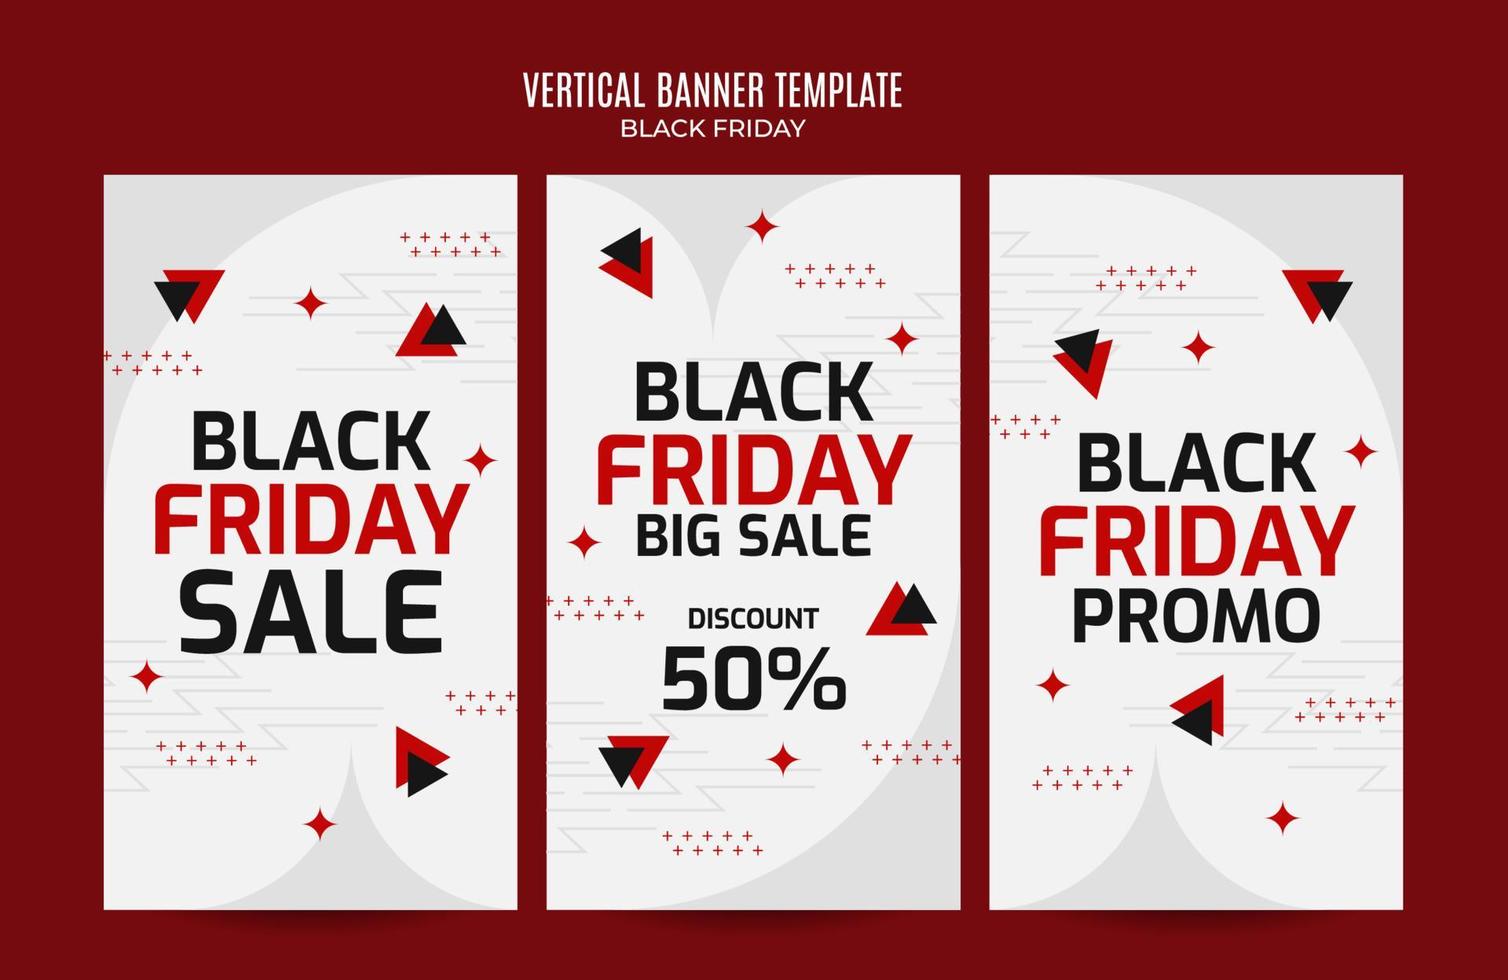 Black Friday sale banner. Social media vector illustration template for website and mobile website development, email and newsletter design, marketing material.